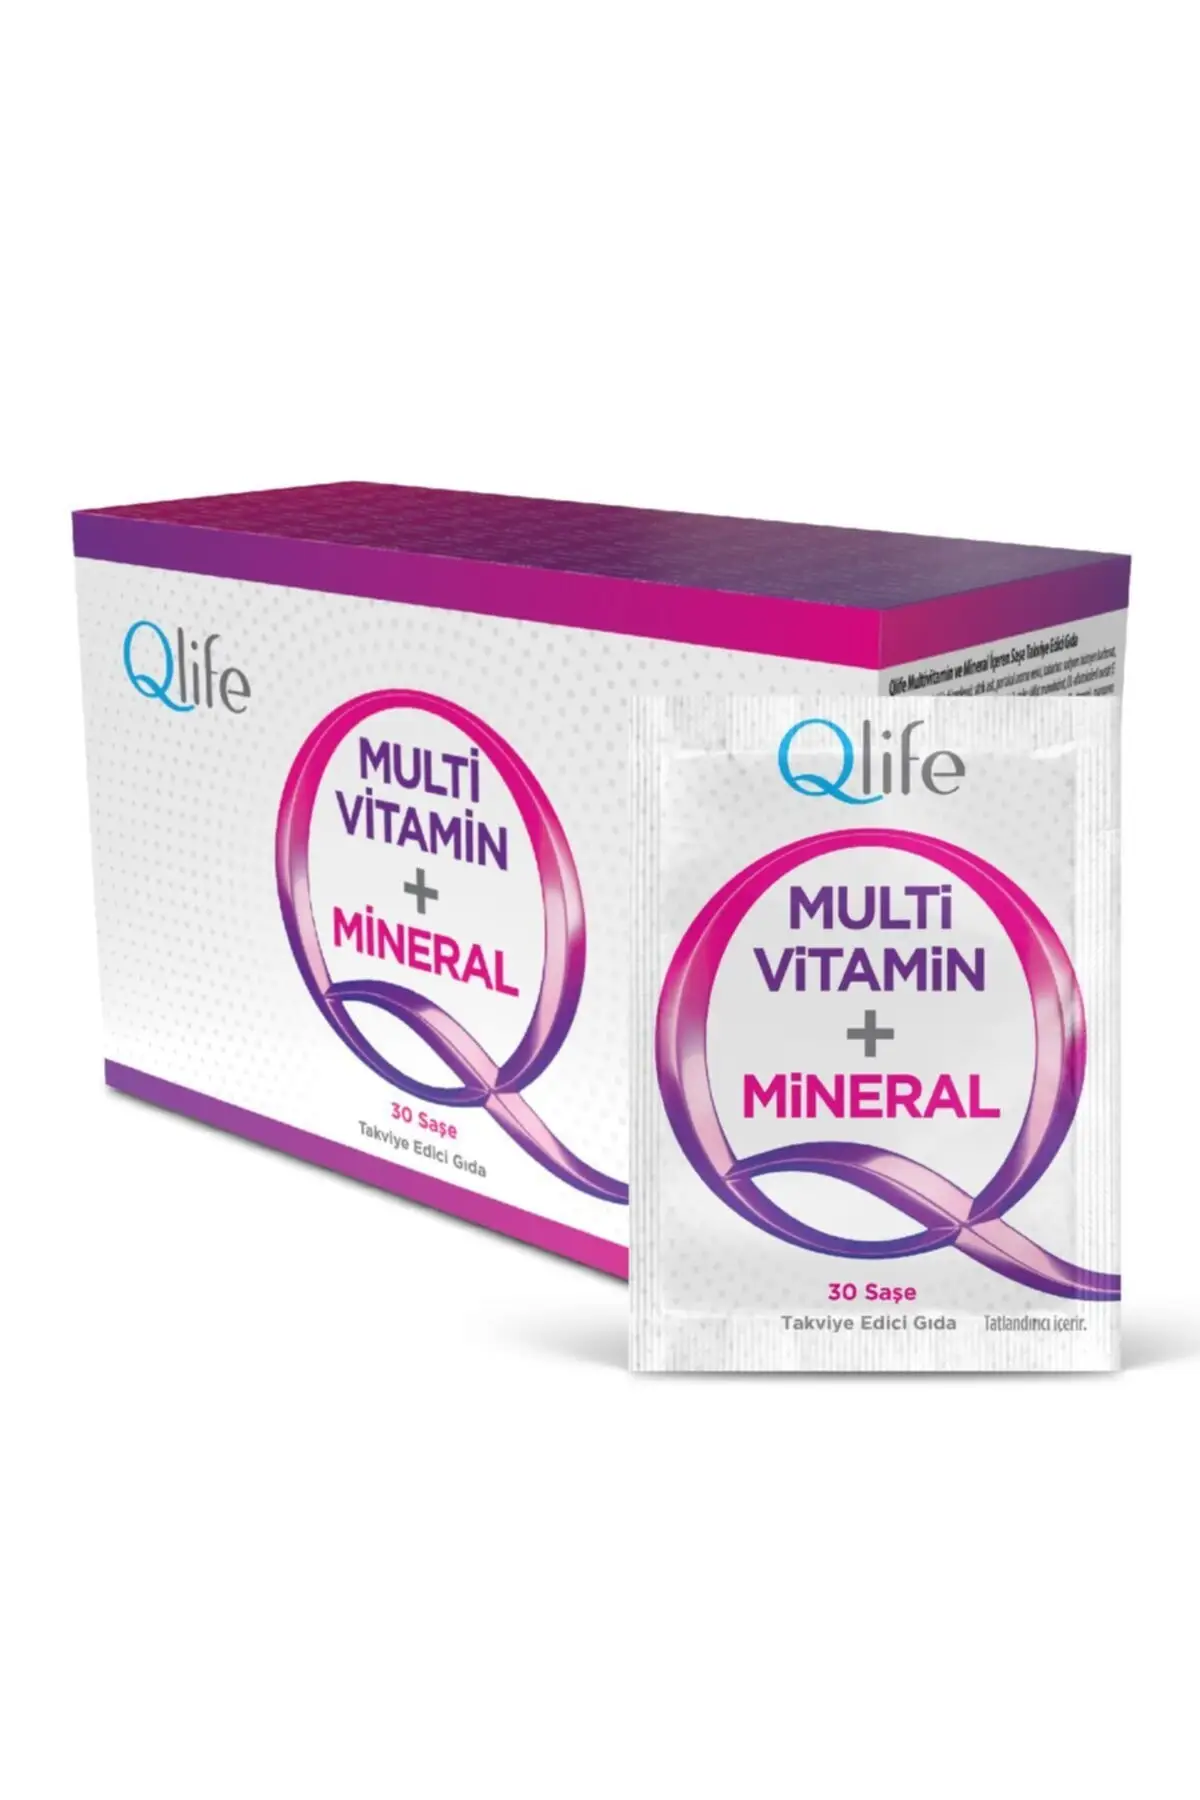 

Qlife Multivitamin + Mineral Raspberry Flavored 30 Sachet aroma dispenser water melting vitamin protective immune complex bone development